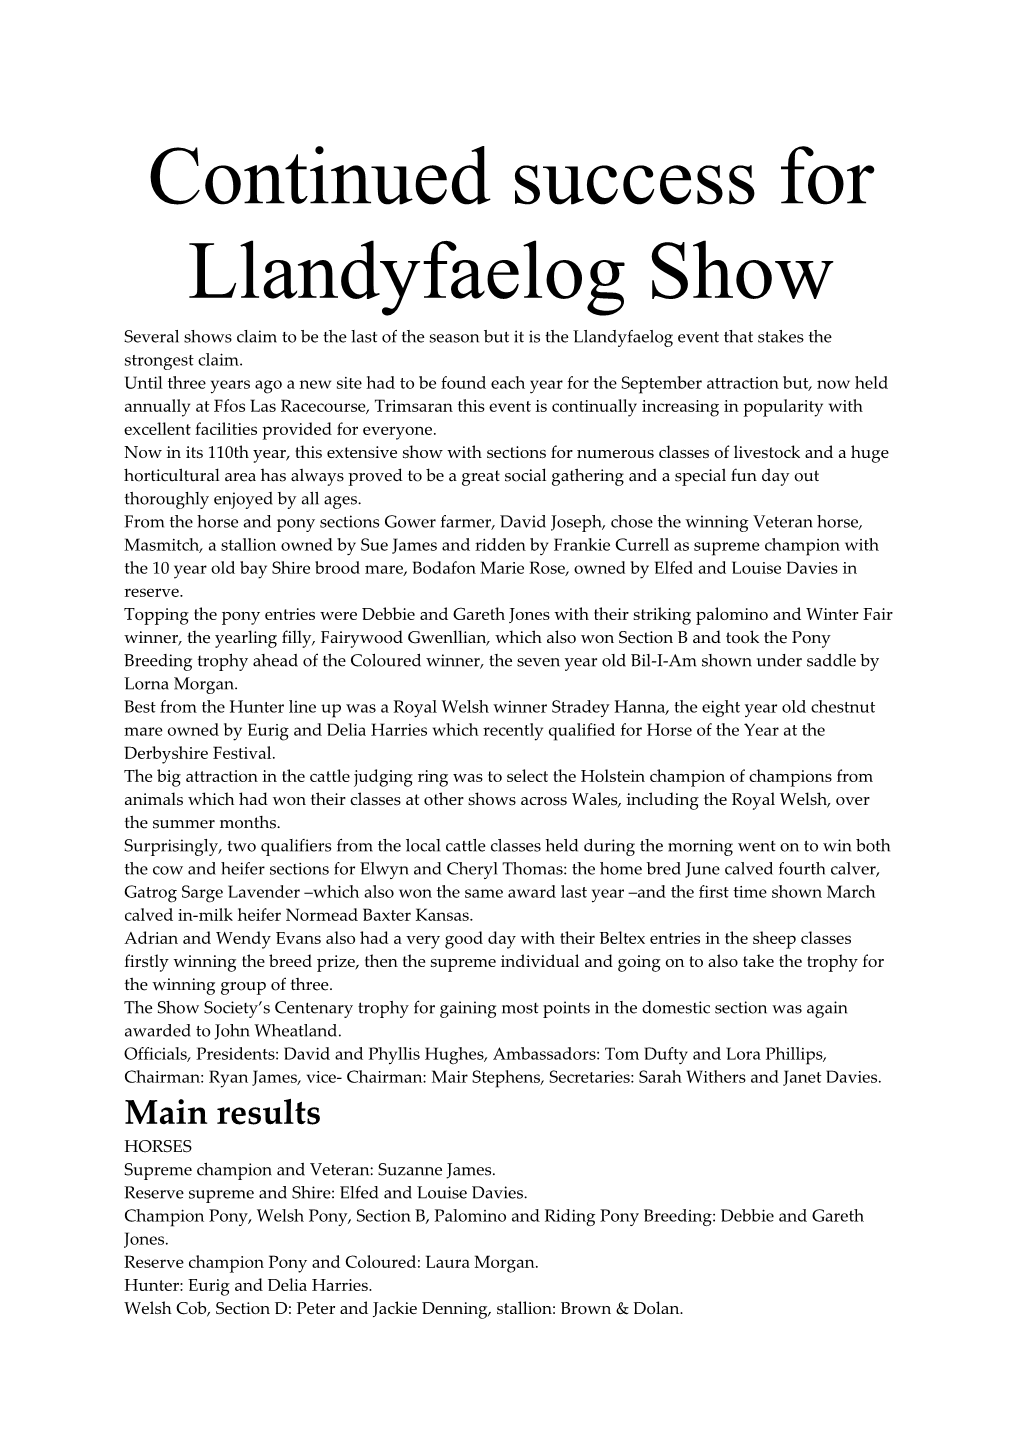 Continued Success for Llandyfaelog Show